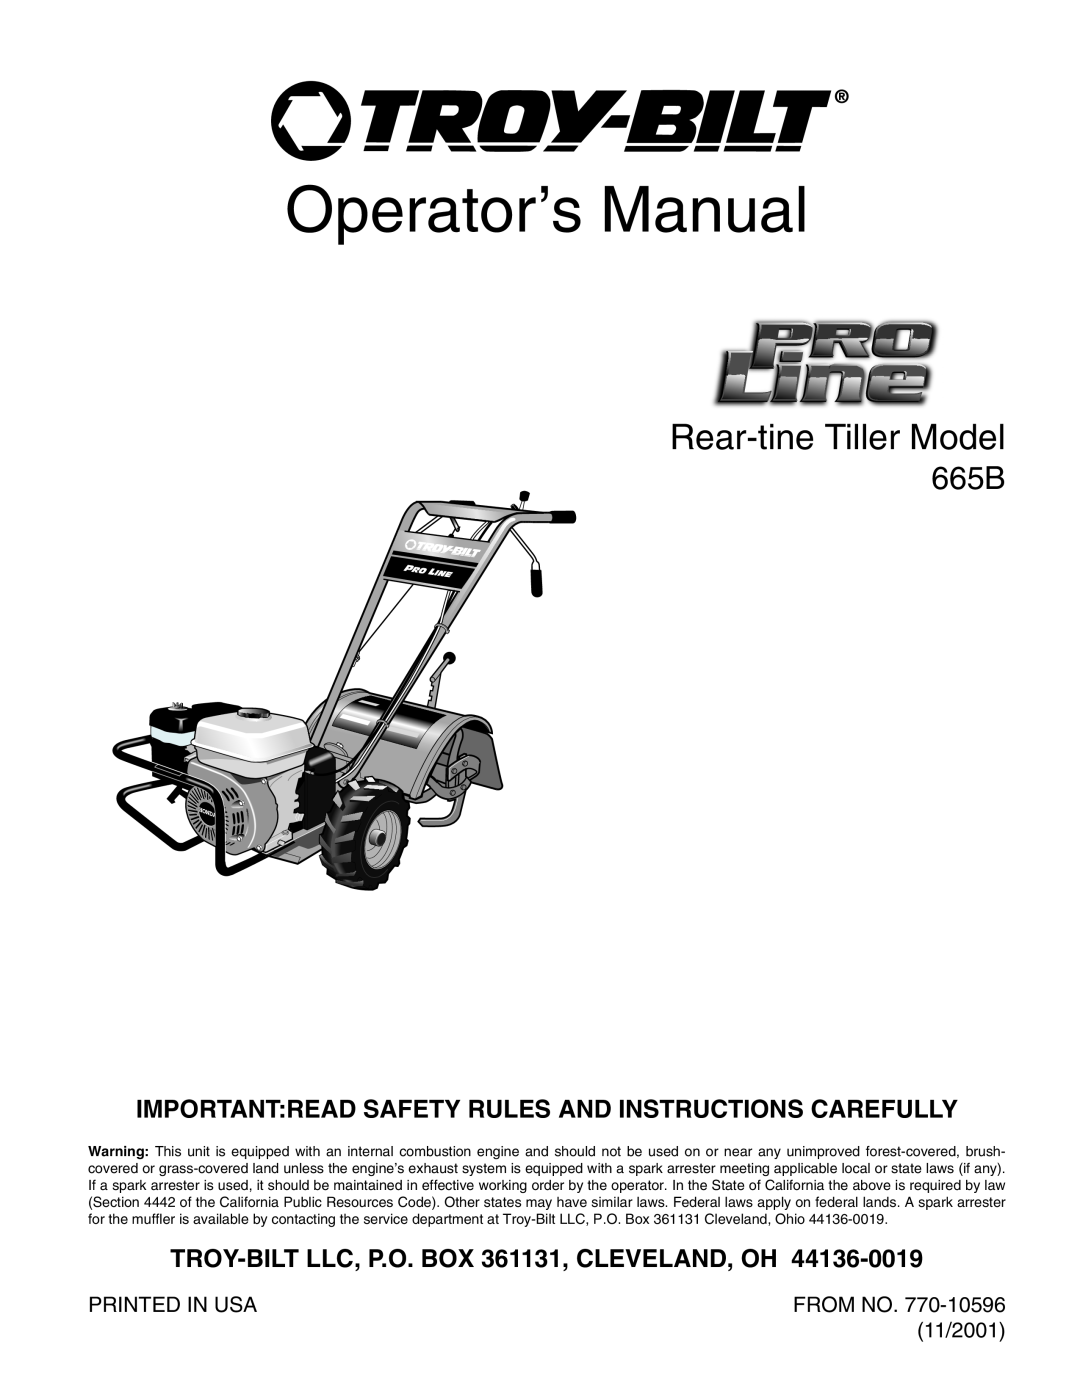 Troy-Bilt 665B manual TROY-BILTLLC, P.O. BOX 361131, CLEVELAND, OH, From No, 11/2001, Operator’s Manual 